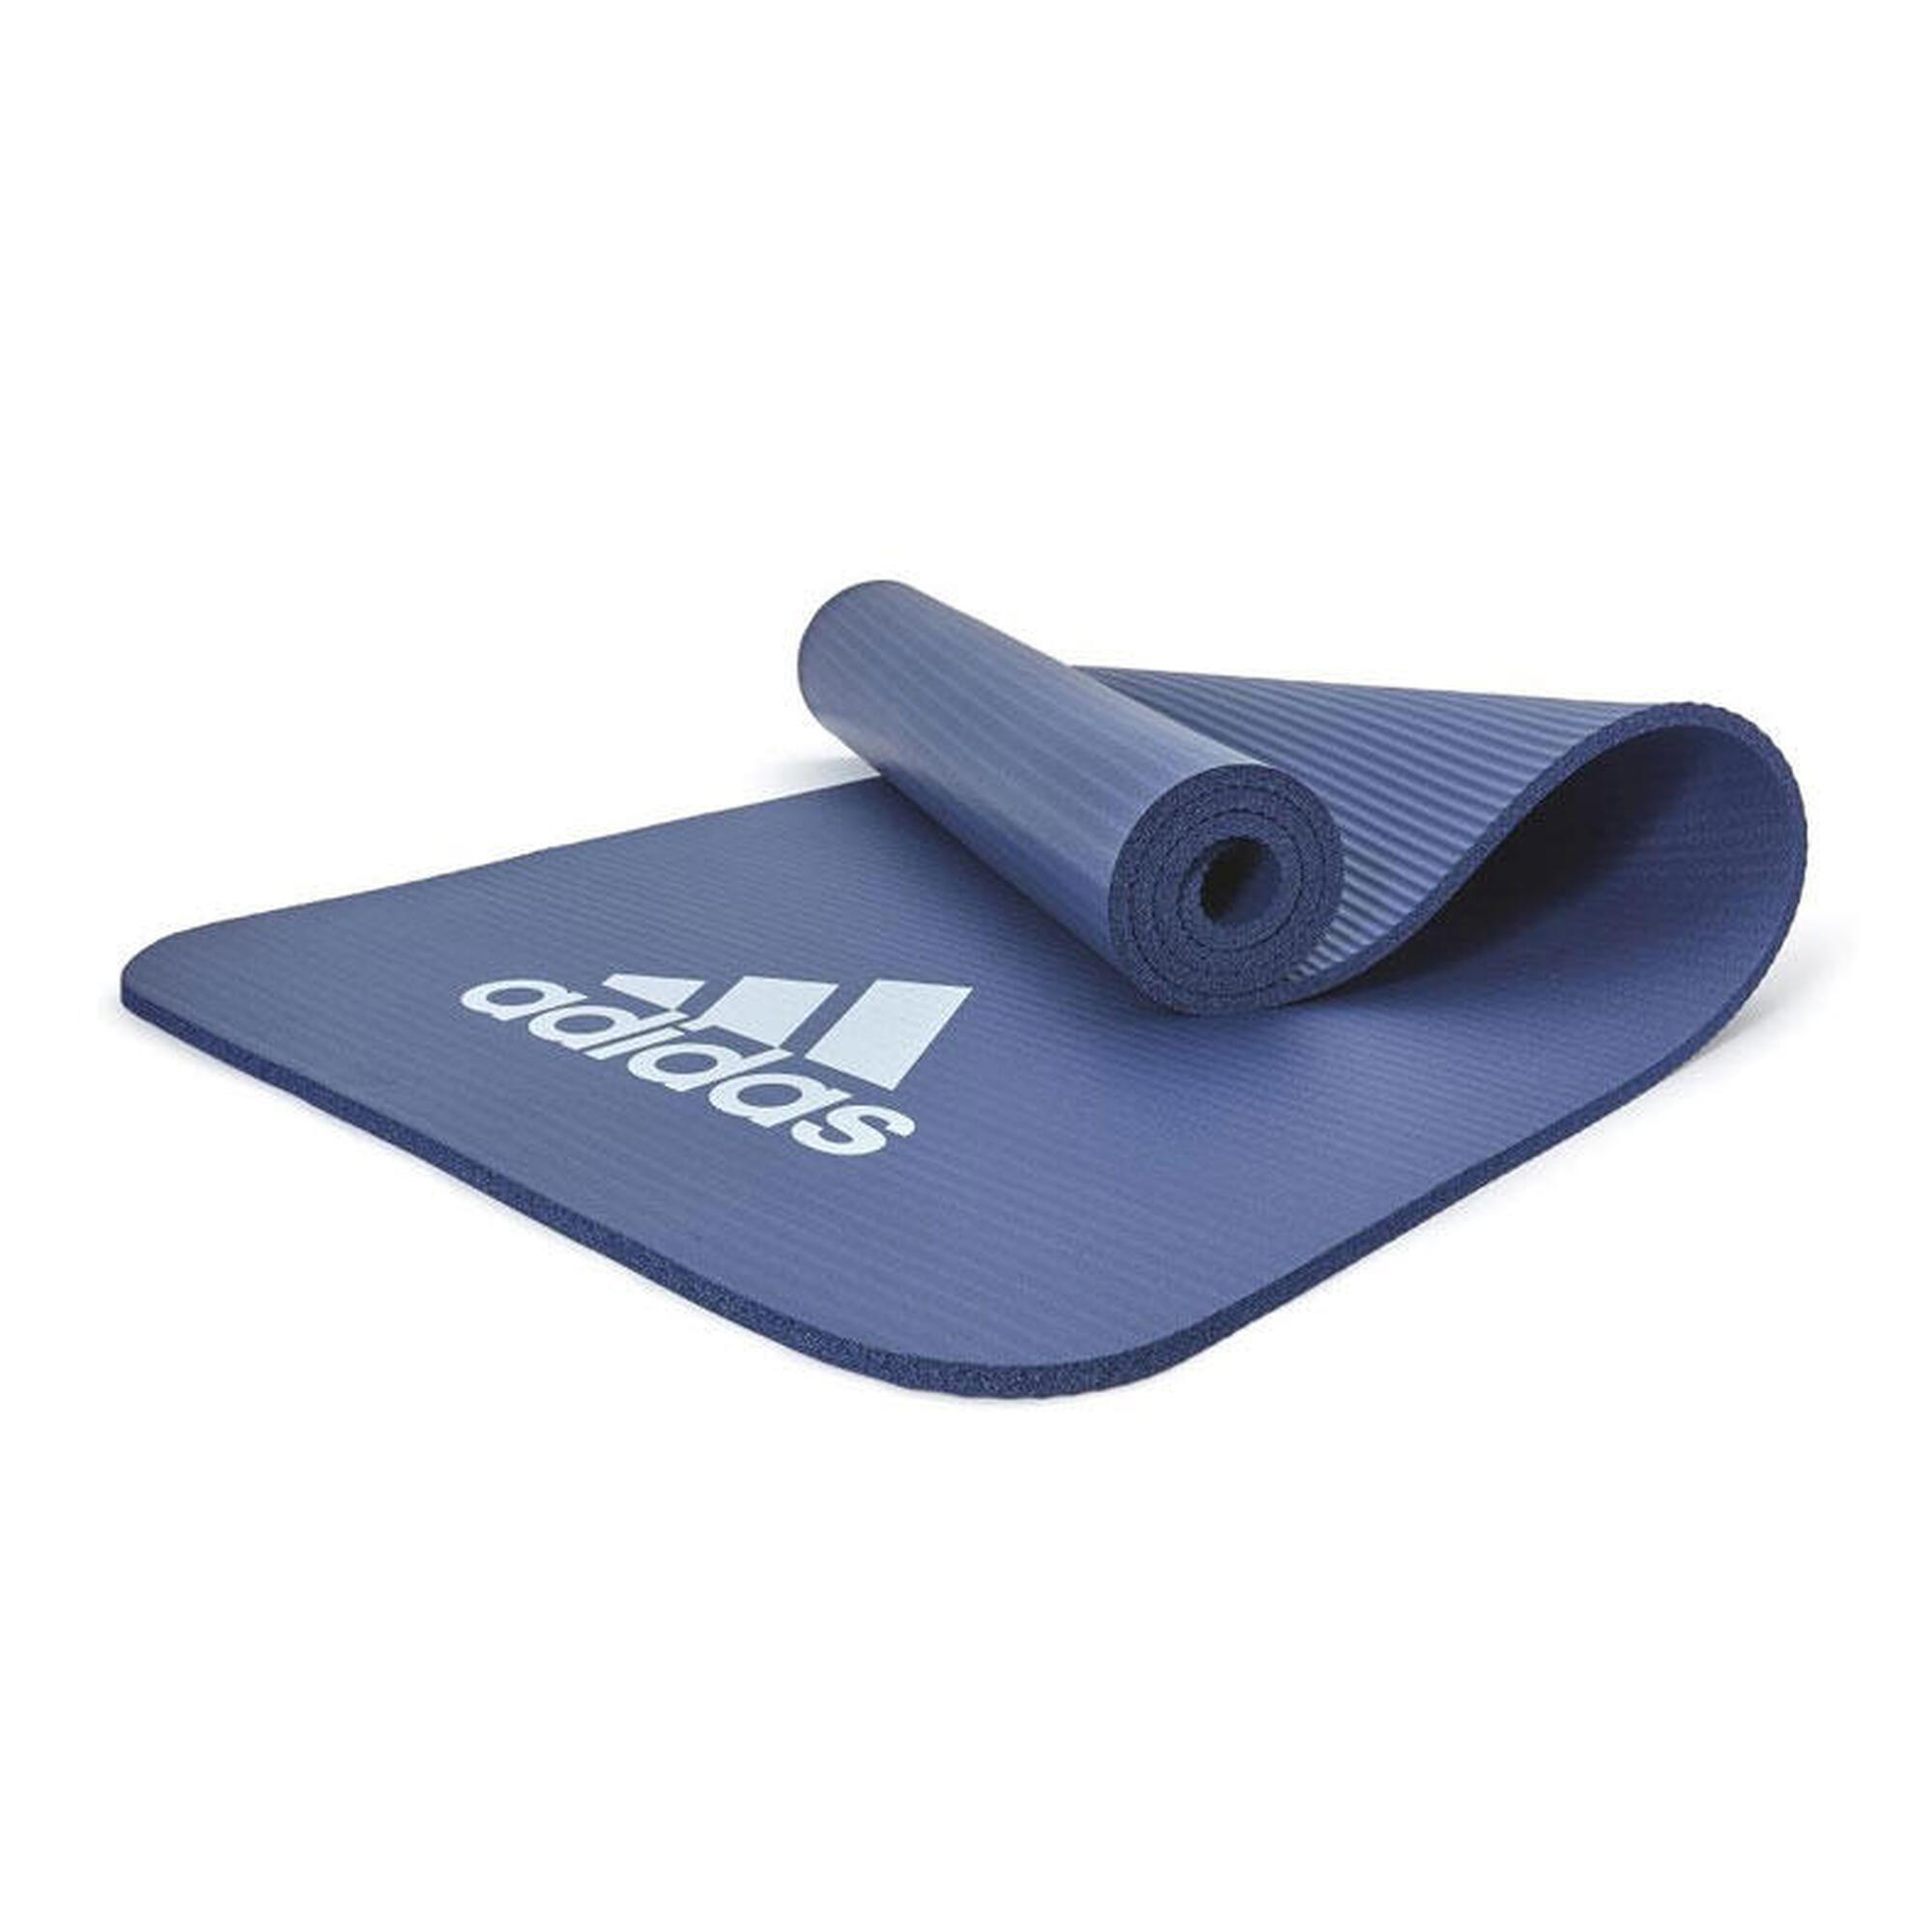 Adidas fitnessmat - 10mm - Blauw